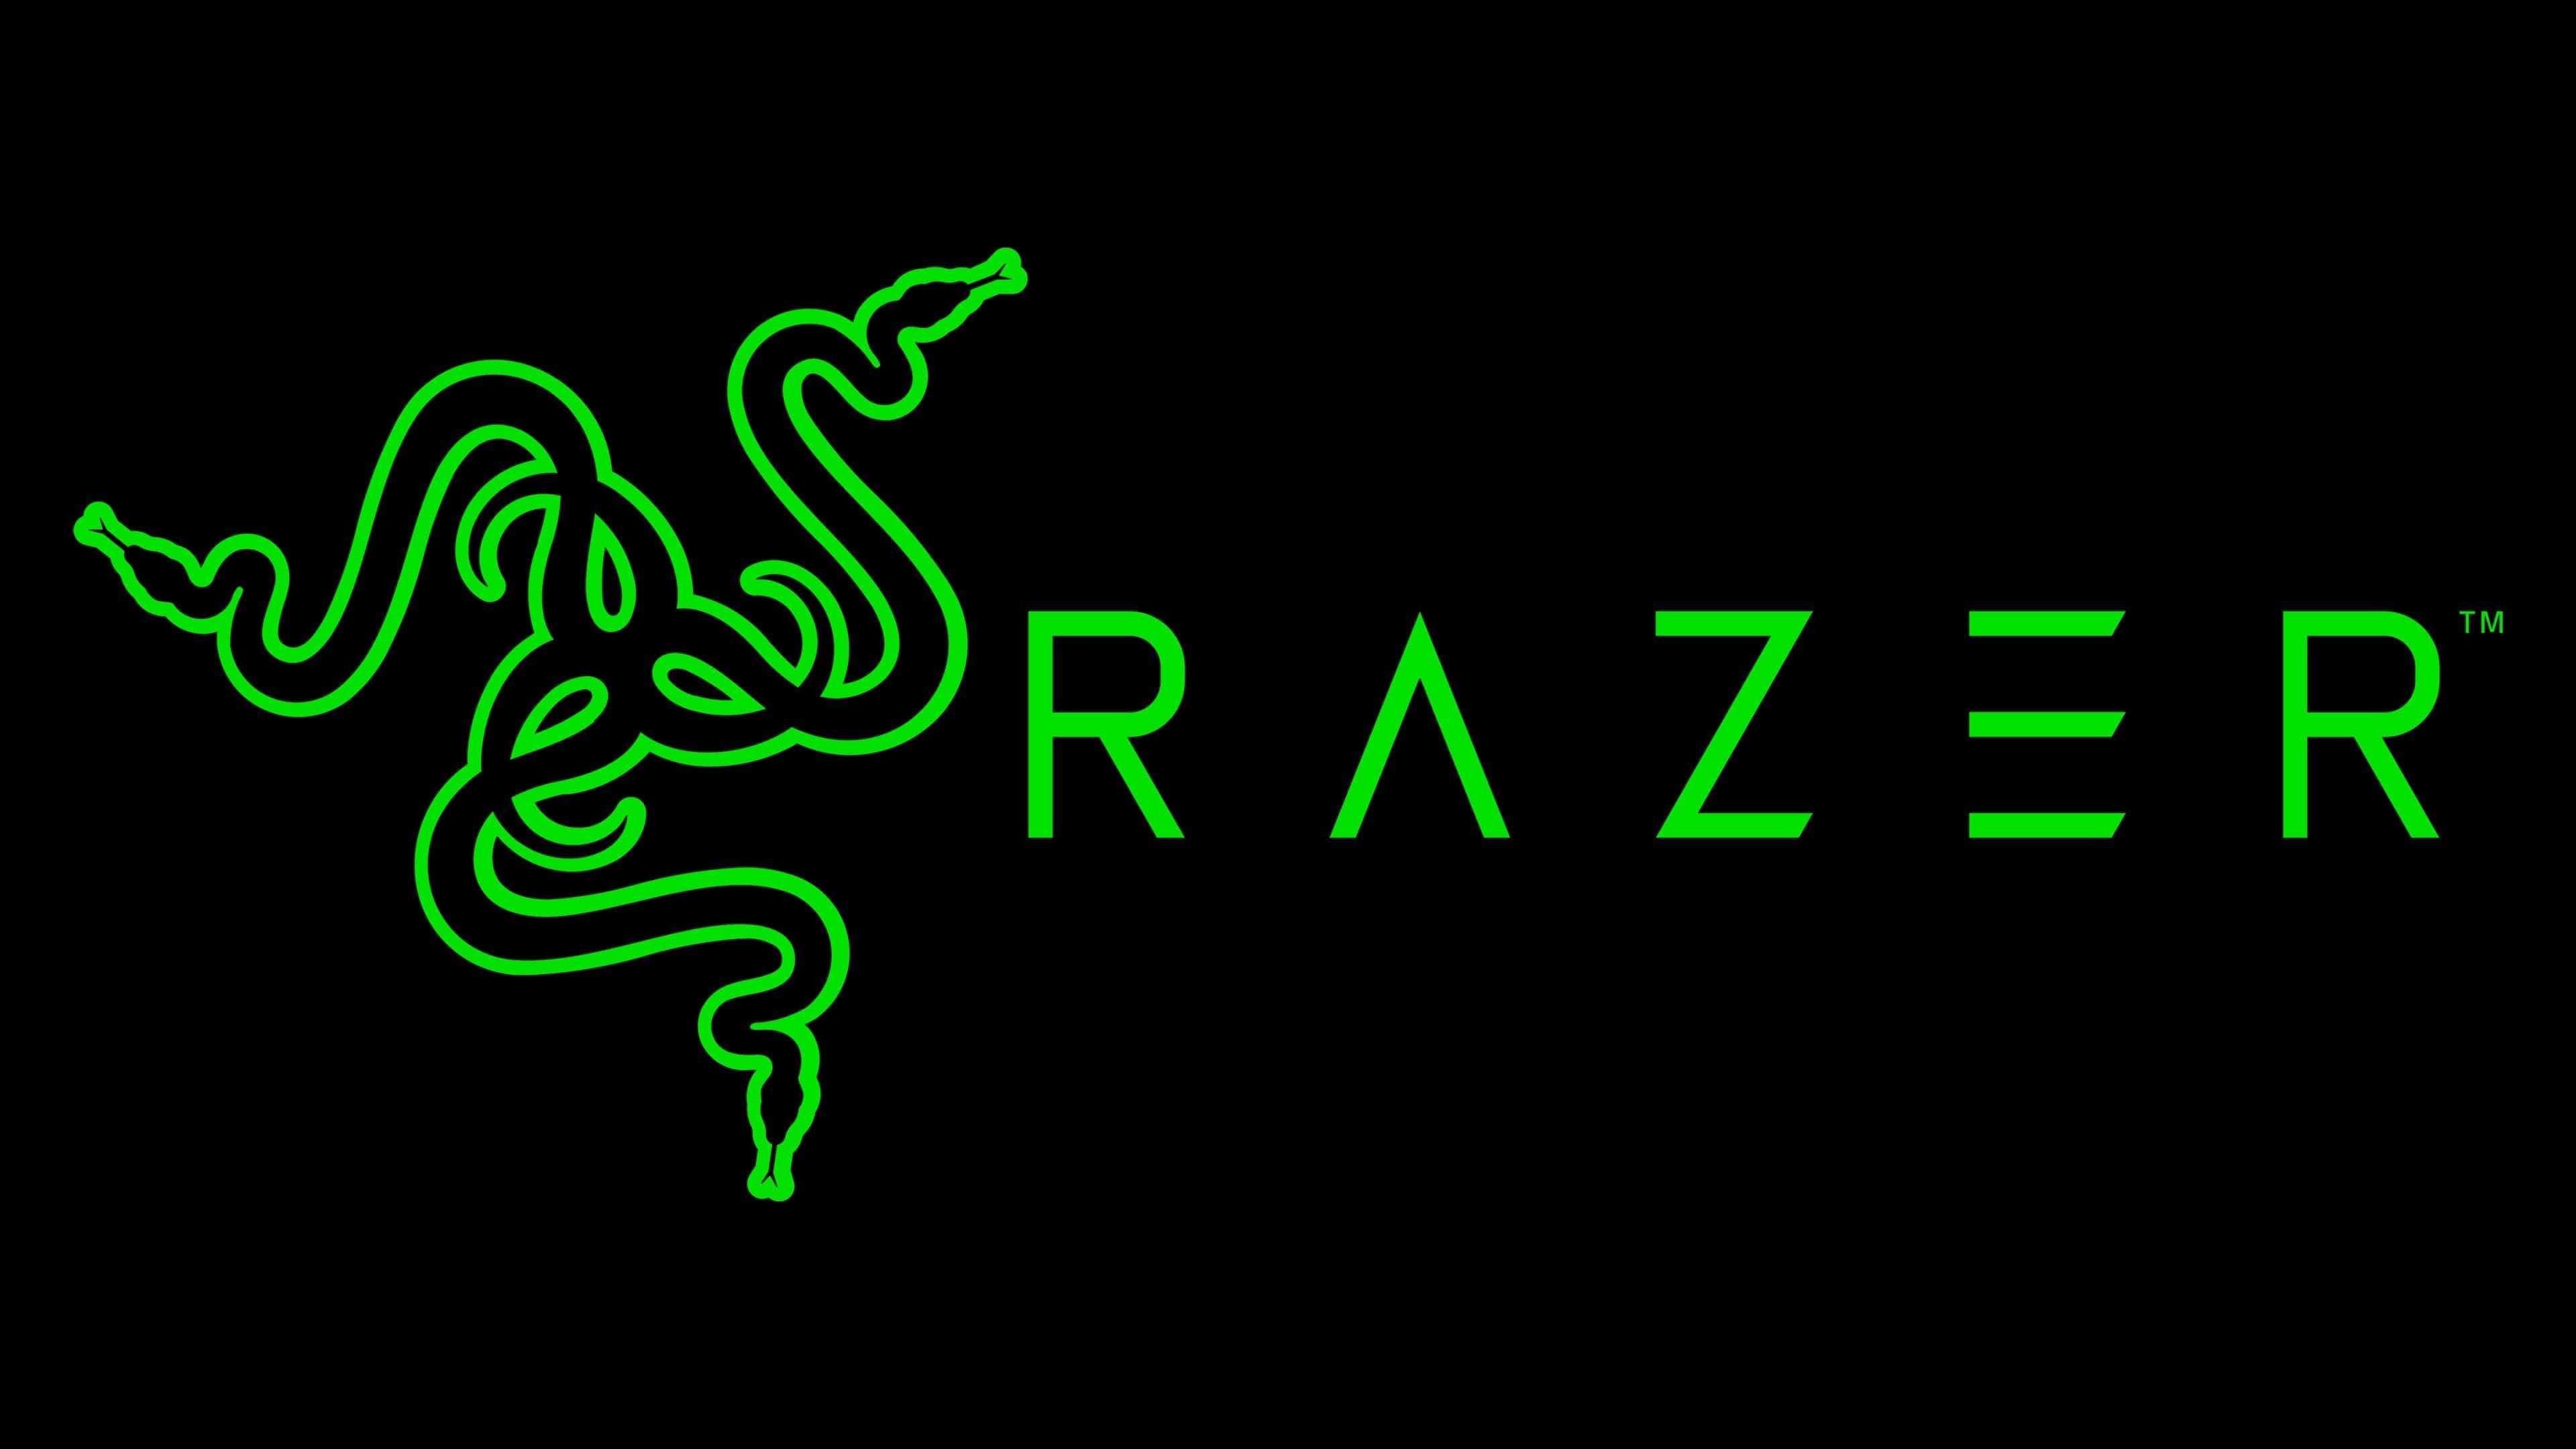 Razer coupon codes, promo codes and deals